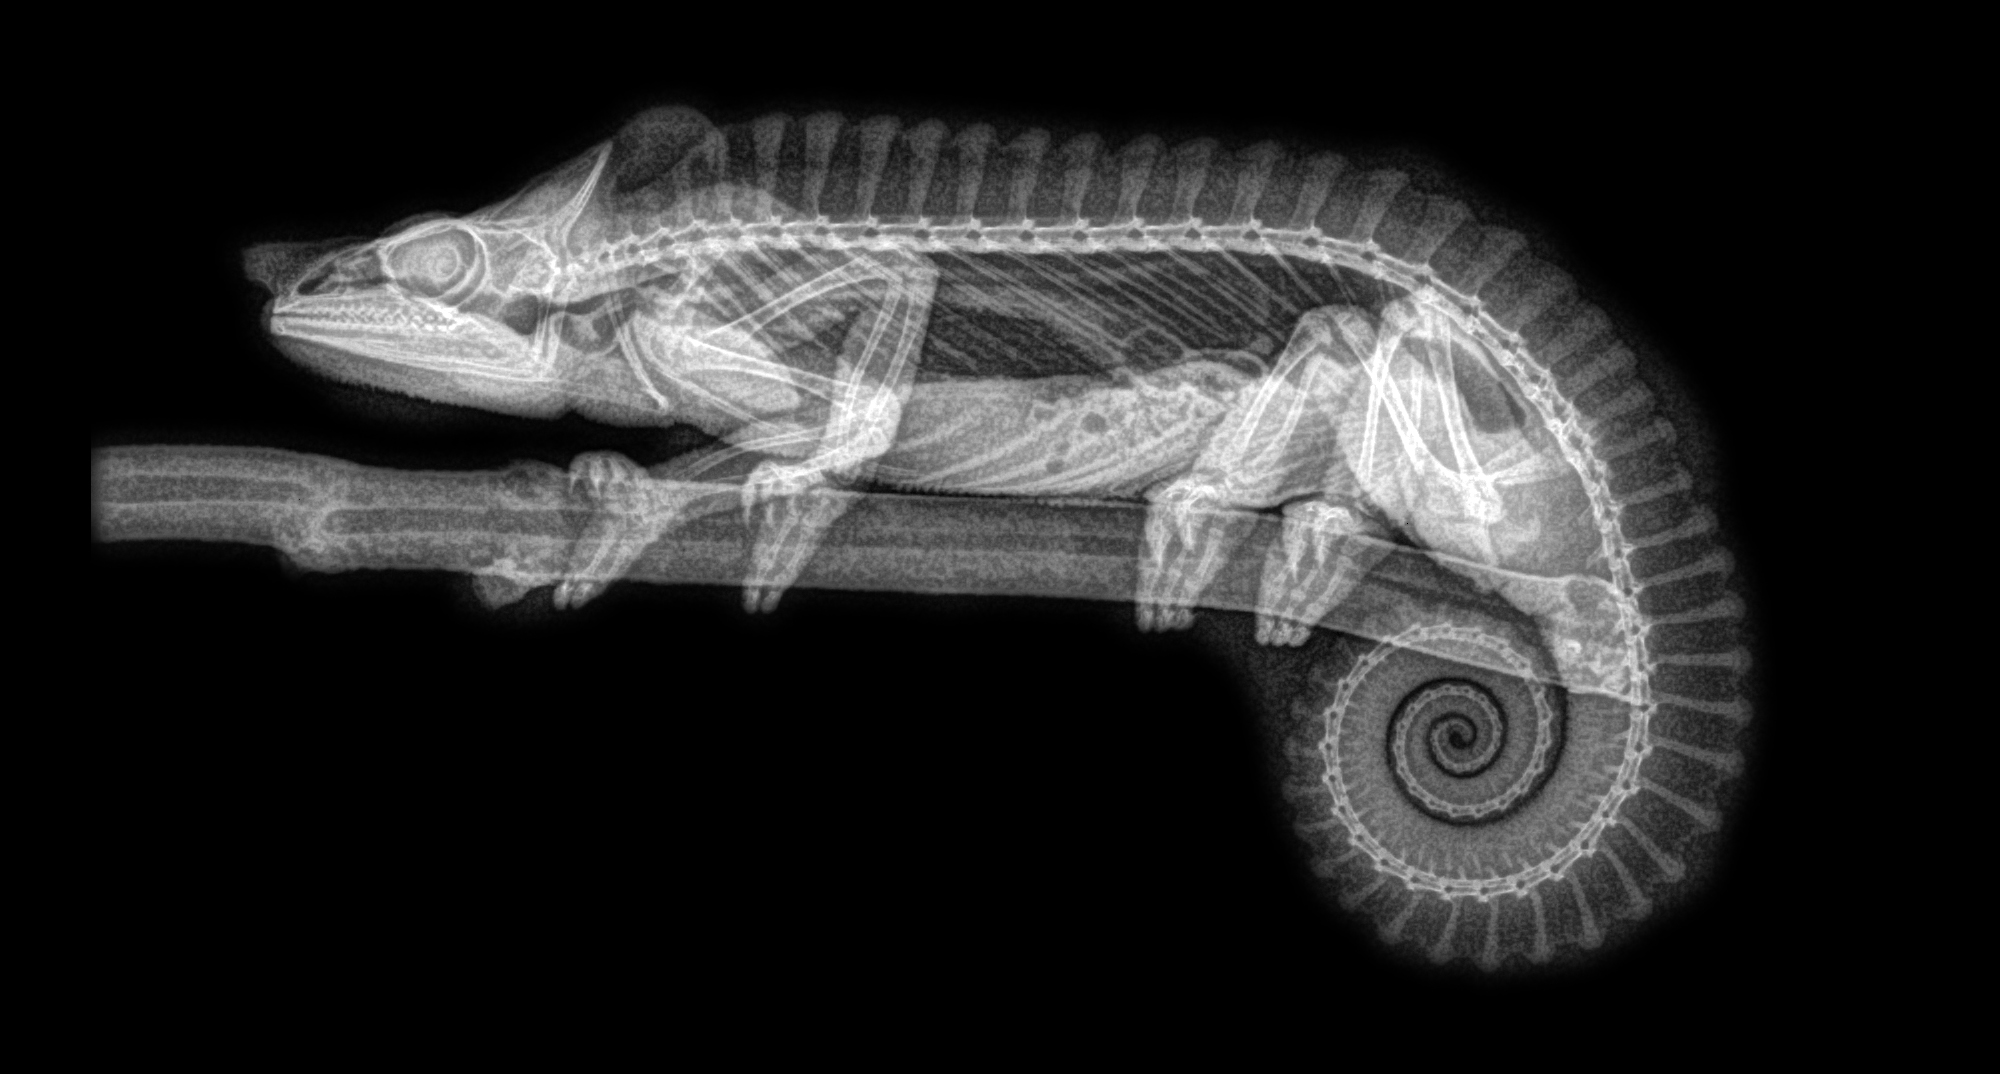 In Photos: Eerie Zoo Animal Skeletons, in X-Rays | Live Science